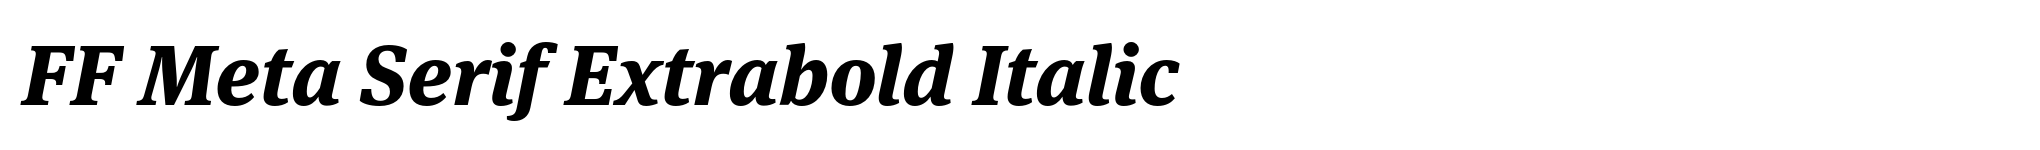 FF Meta Serif Extrabold Italic image